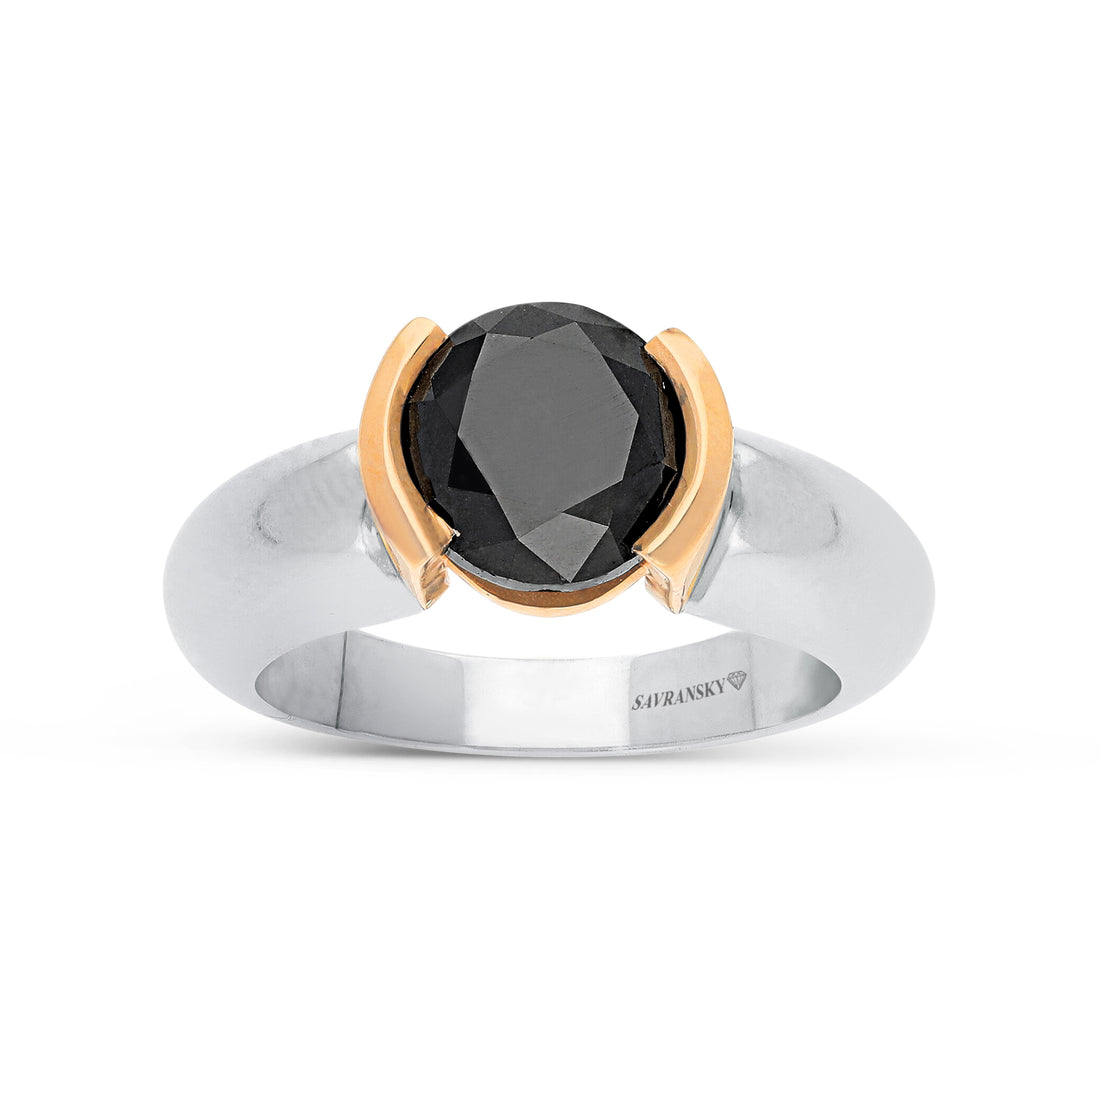 Half Bezel Black Diamond Engagement Ring